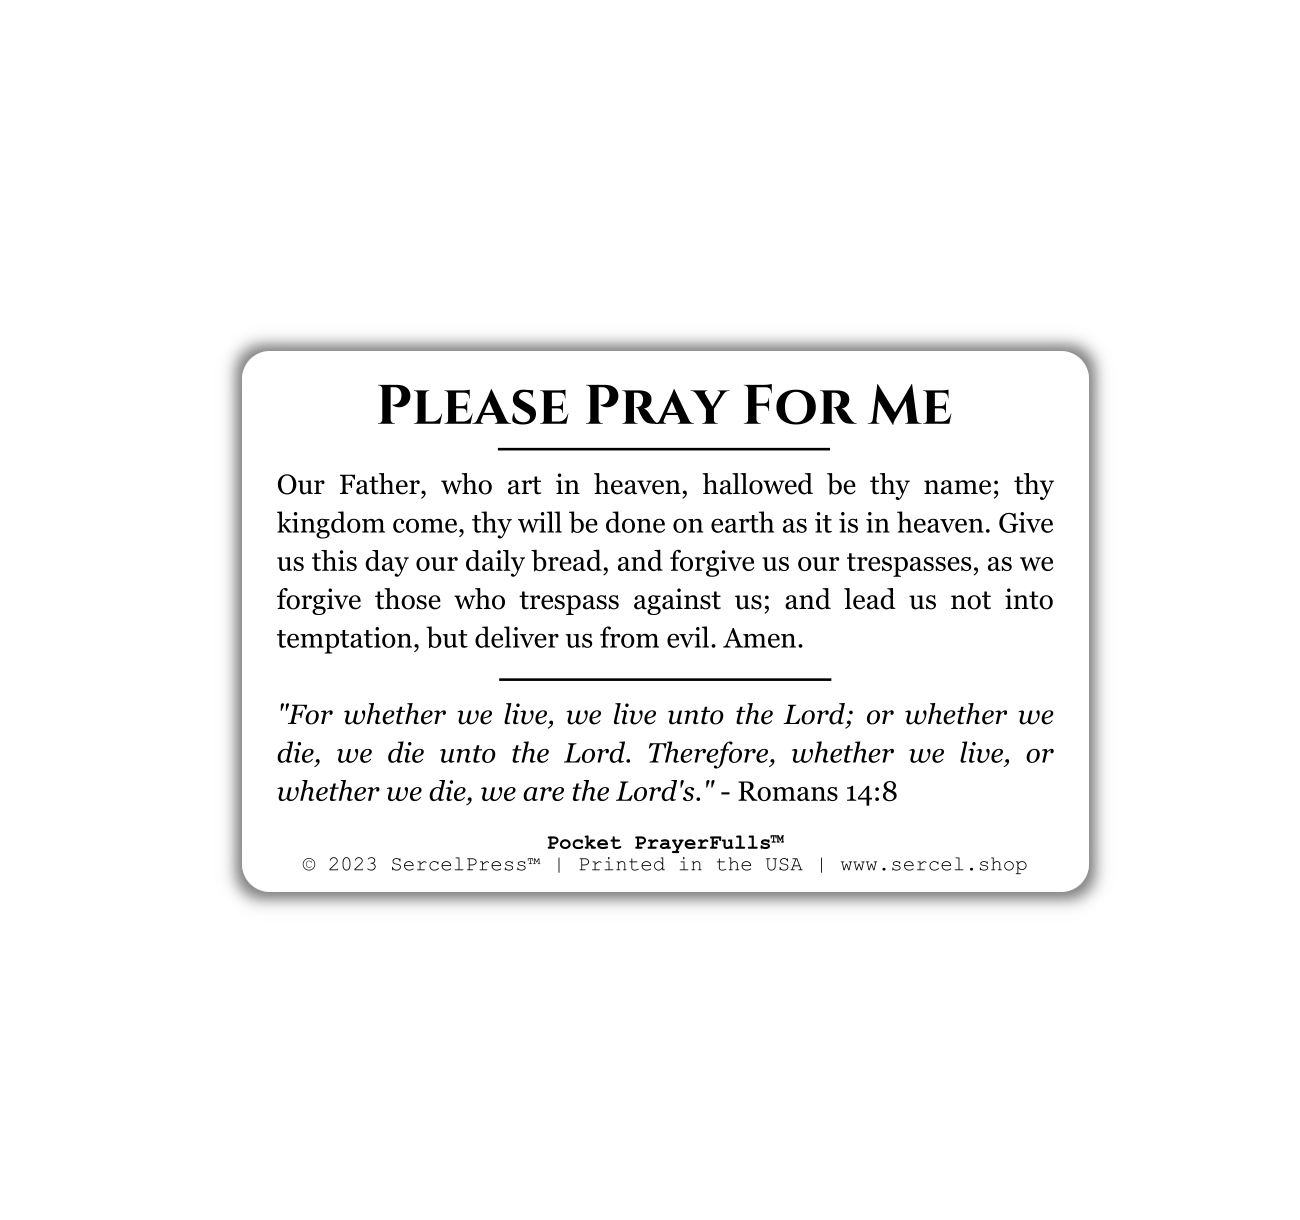 I Am a Catholic - In Case of Emergency Please Call a Priest: Pocket PrayerFulls™ | Durable Wallet Prayer Cards